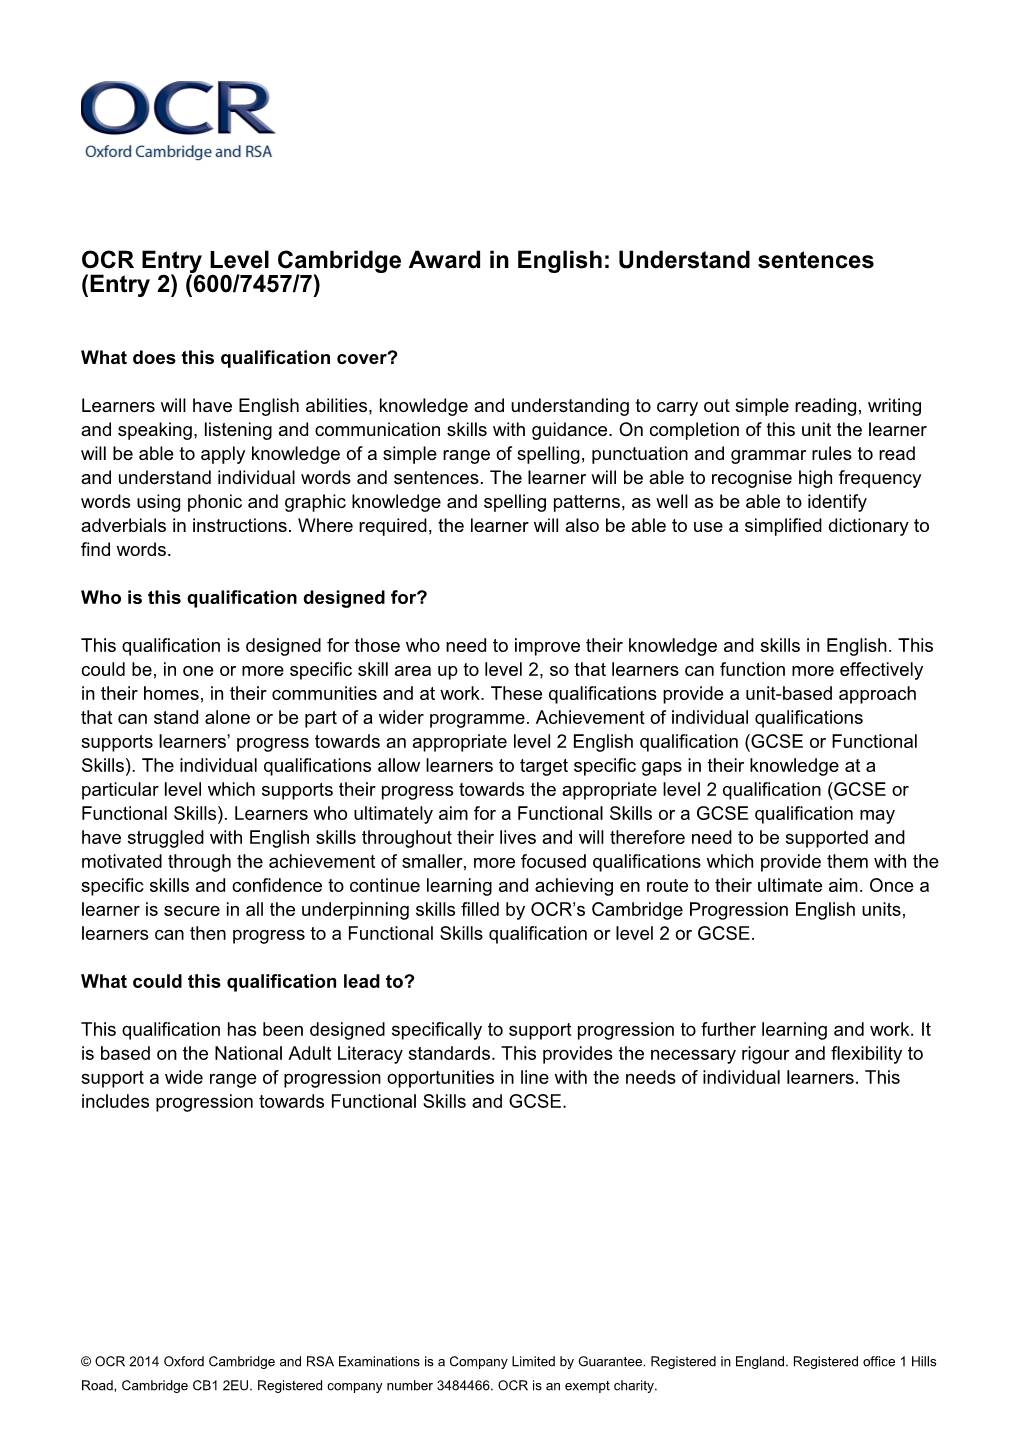 OCR Entry Level Cambridge Award in English: Understand Sentences (Entry 2) (600/7457/7)